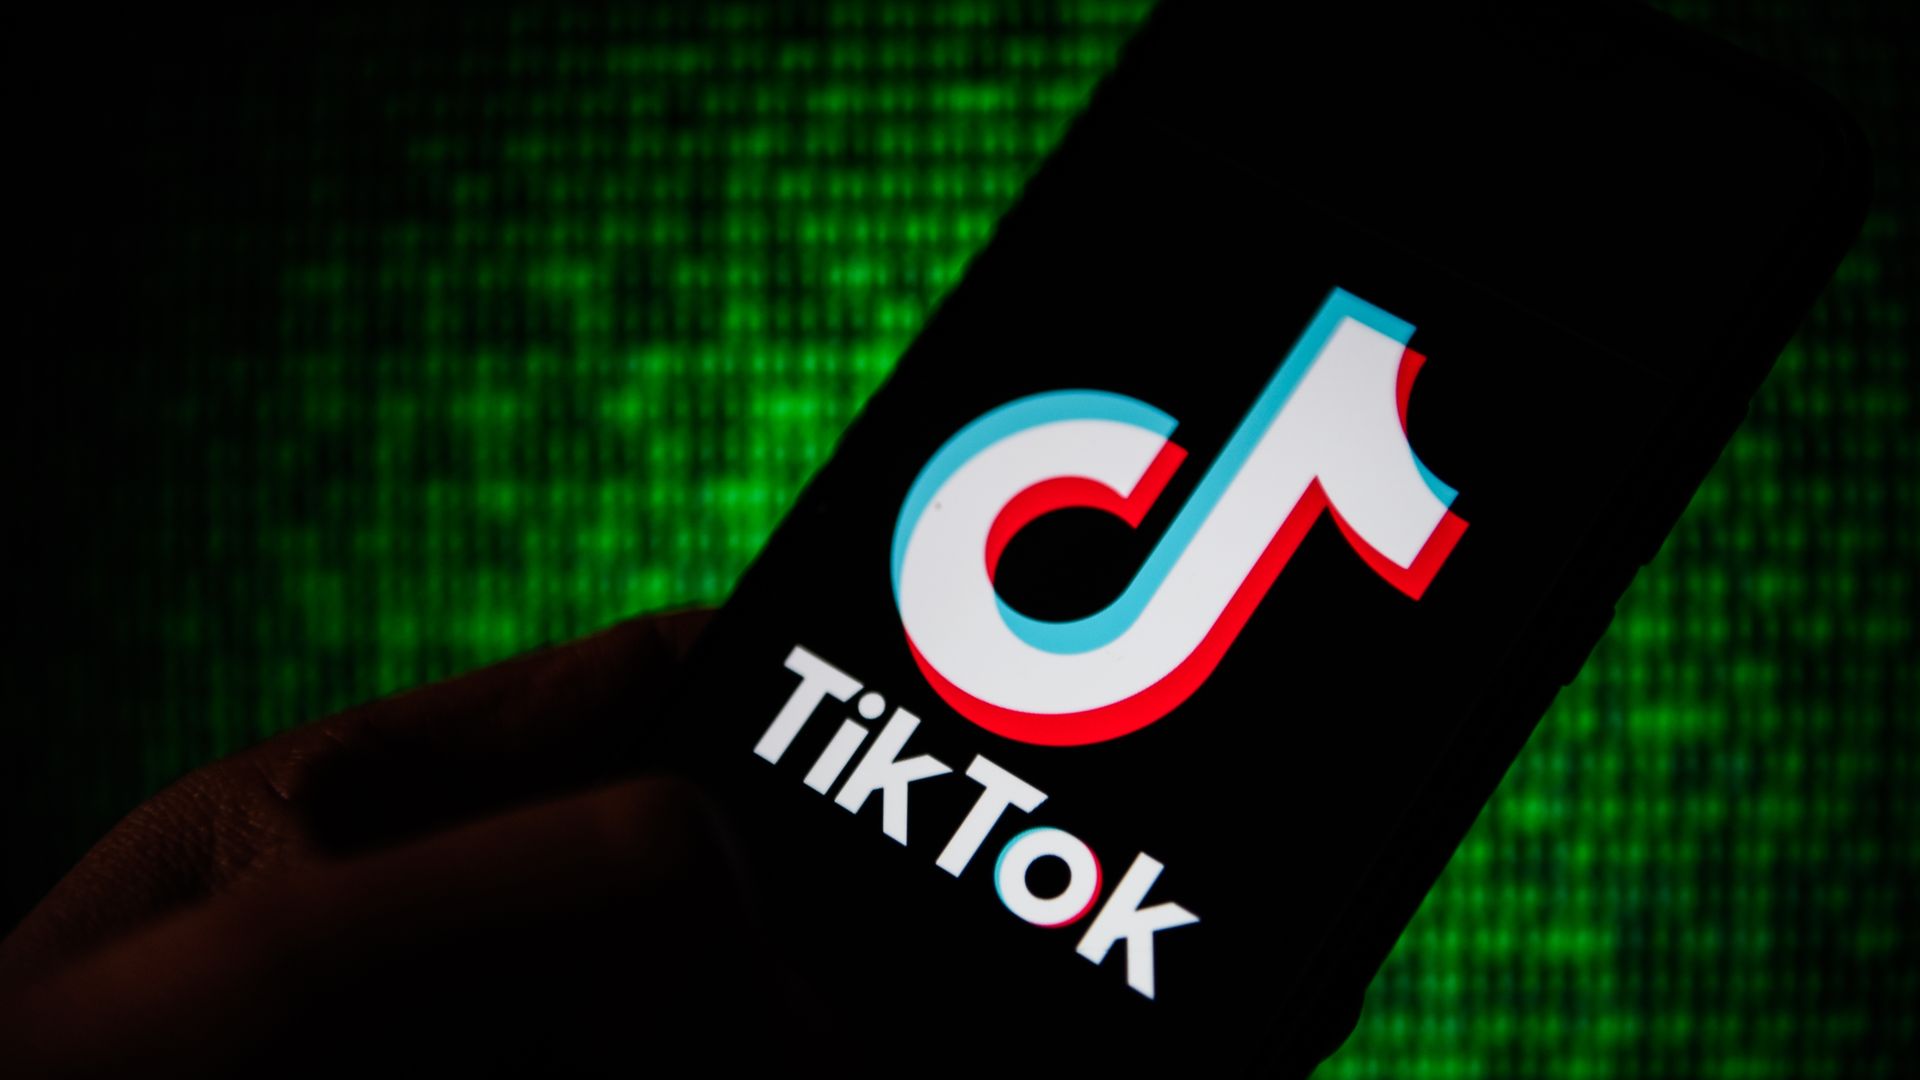 The TikTok logo appears on a smartphone screen.